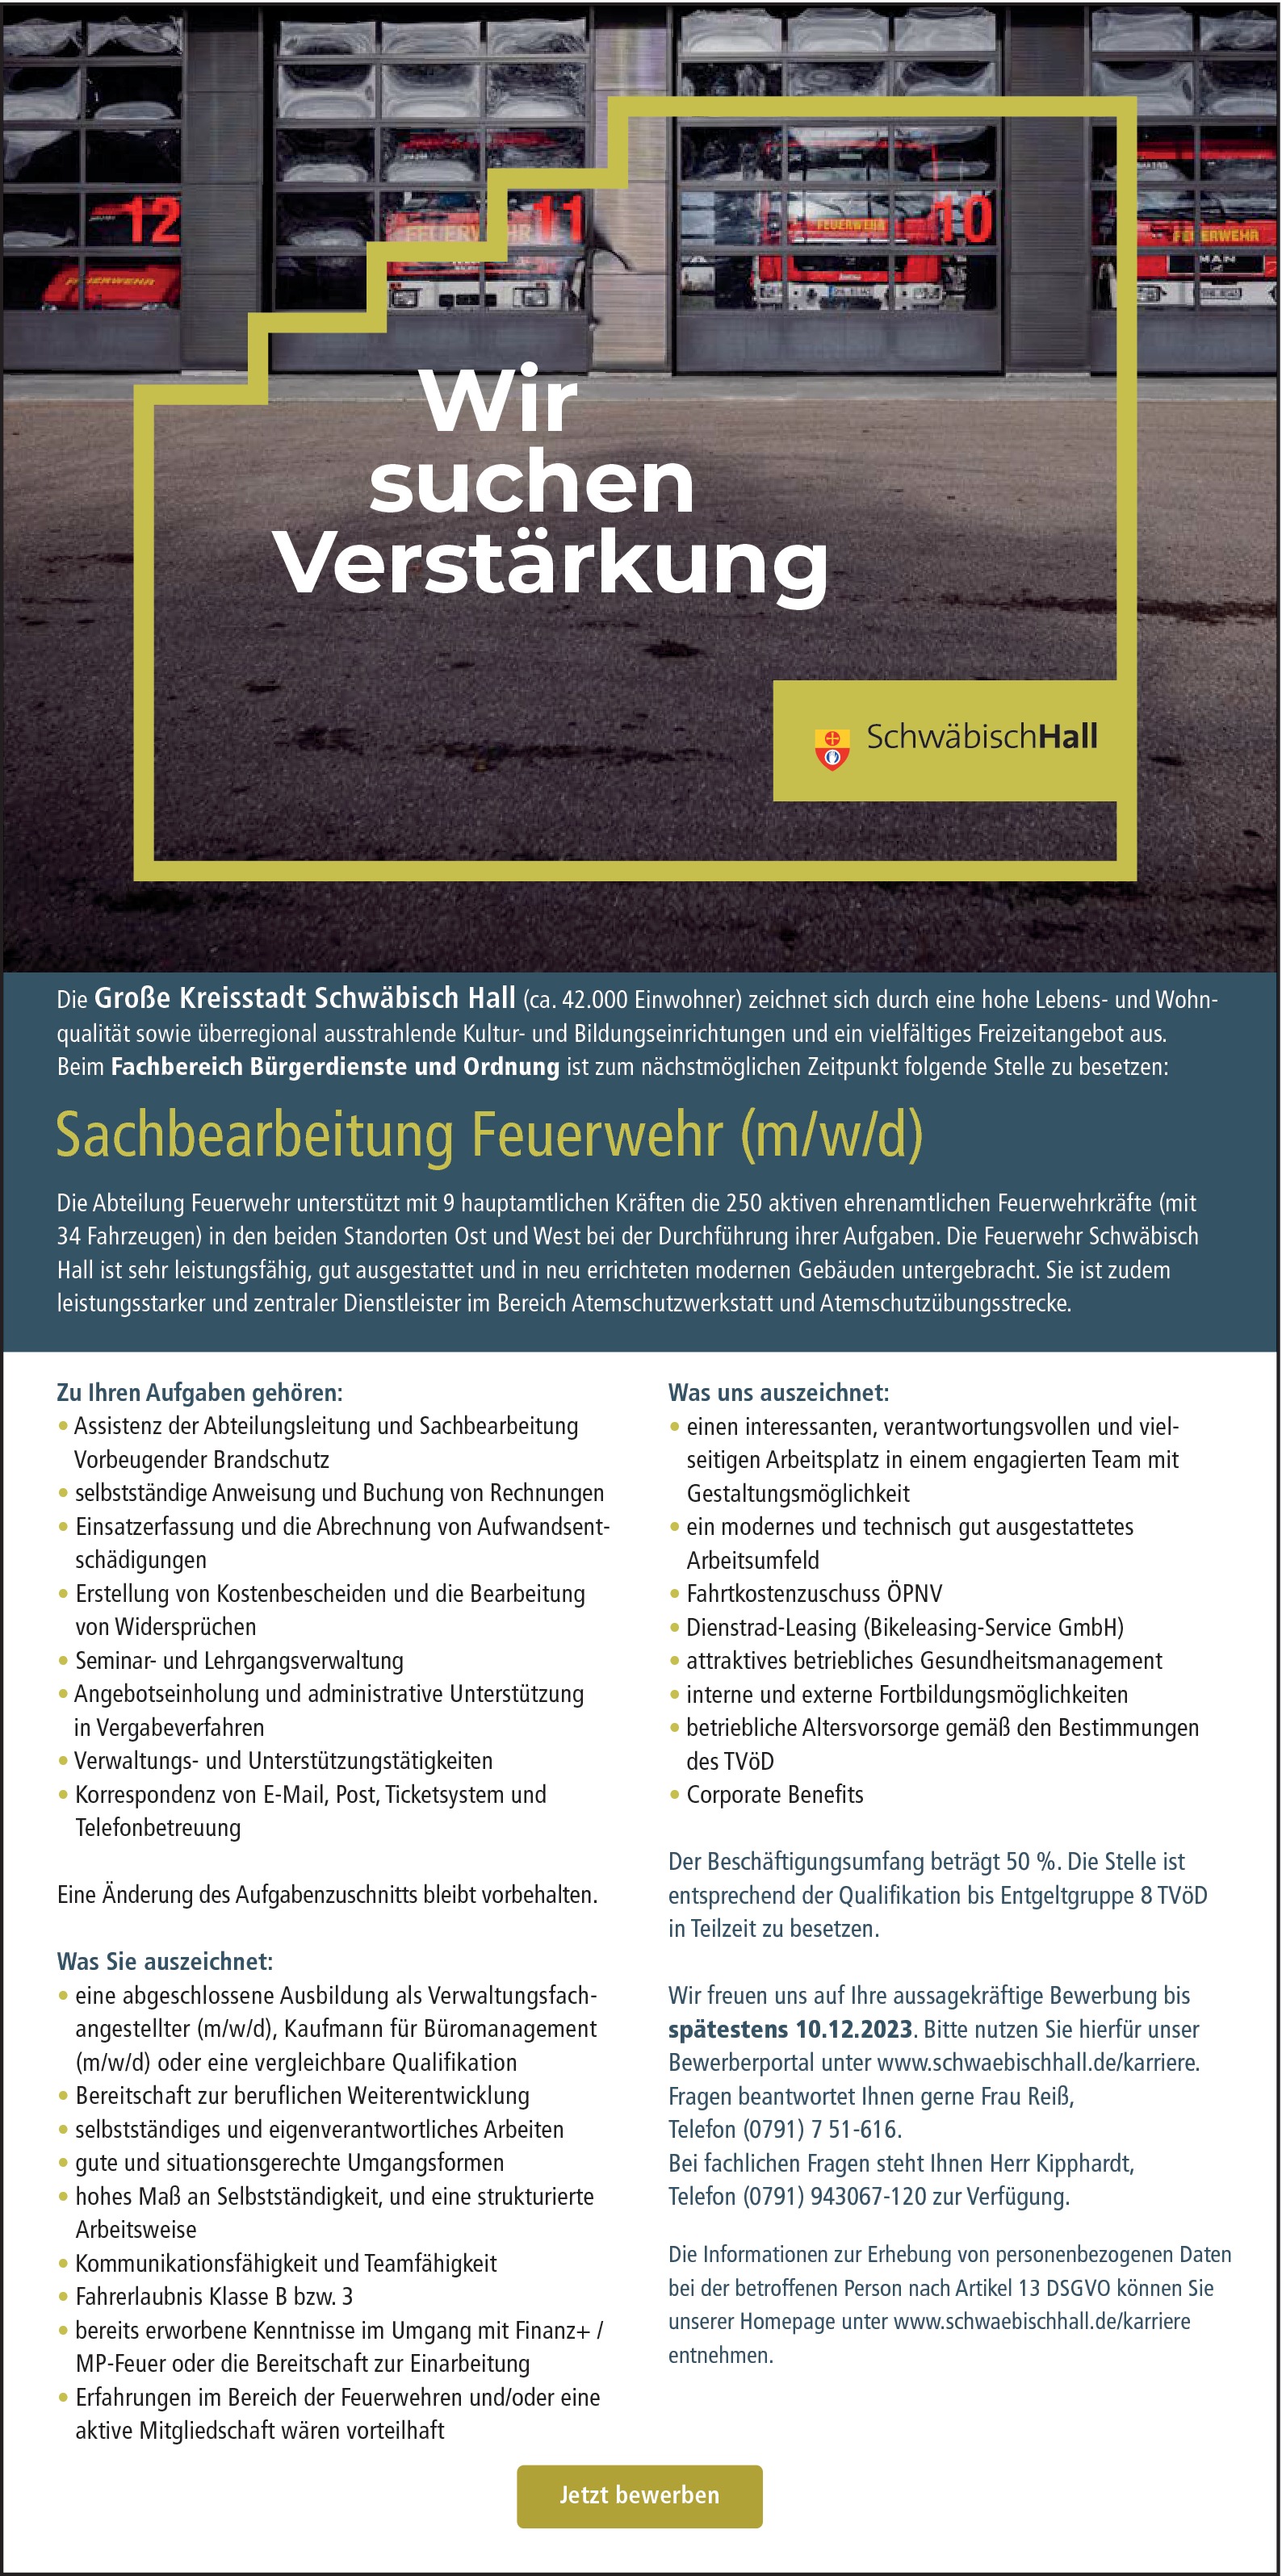 Kaufmann / Kauffrau - Büromanagement (m/w/d)